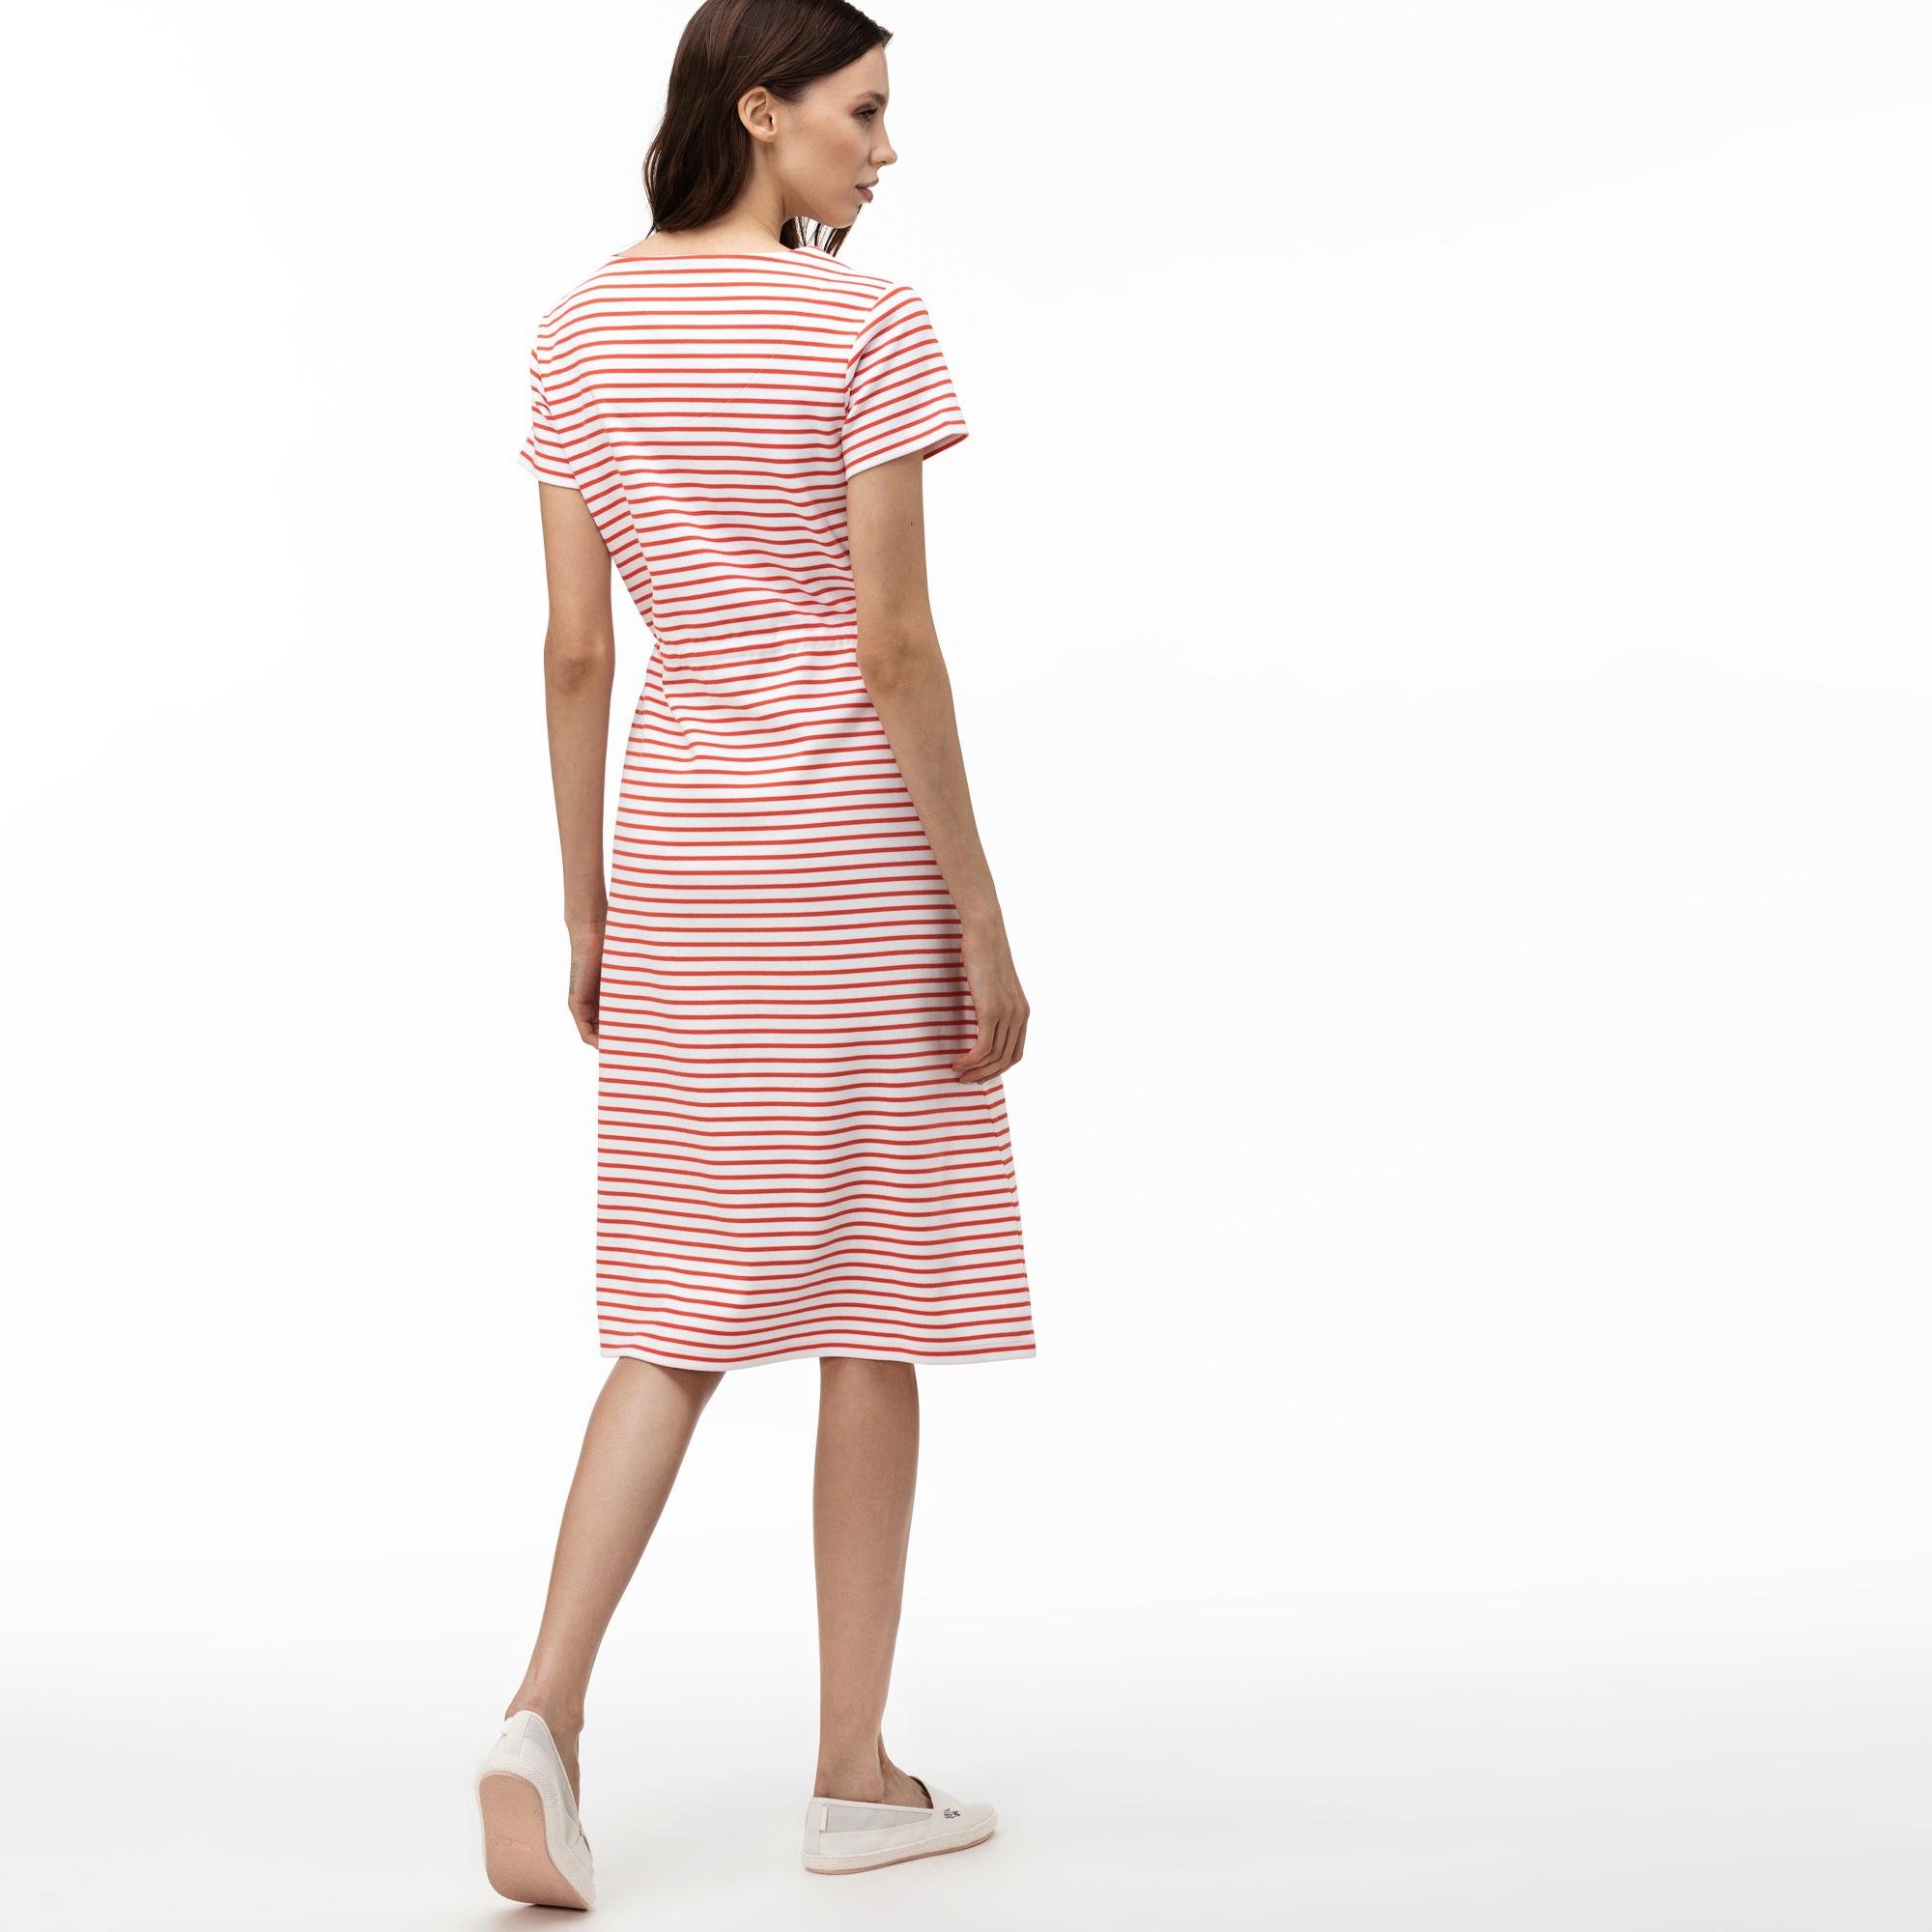 Lacoste Women's V-Neck Striped Short Sleeve Dress